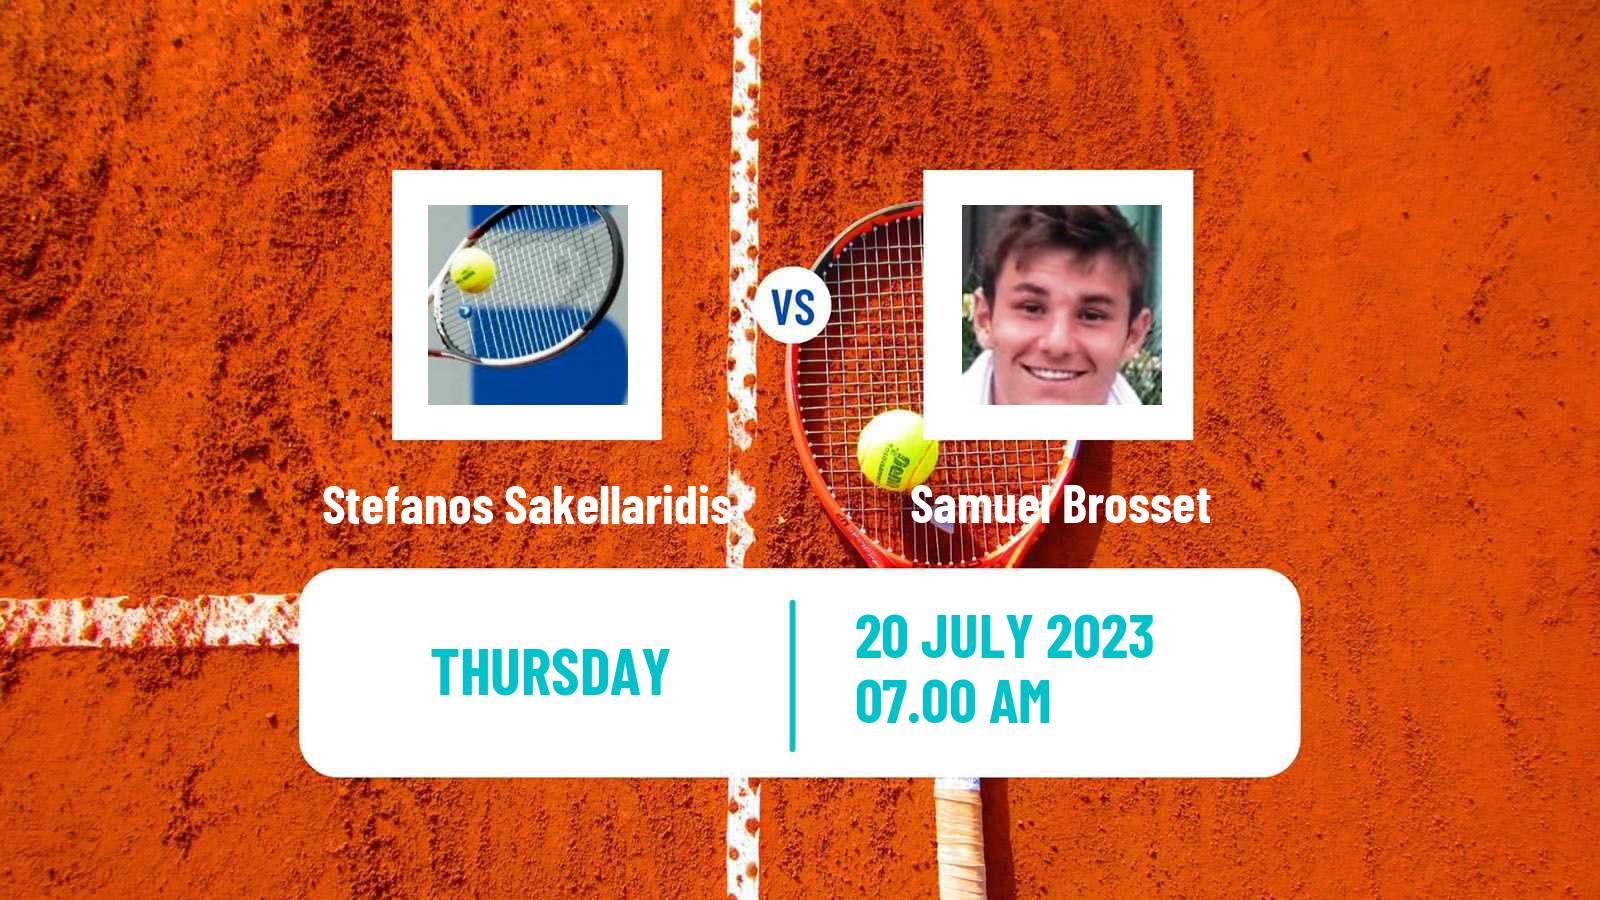 Tennis ITF M25 Esch Alzette 2 Men Stefanos Sakellaridis - Samuel Brosset